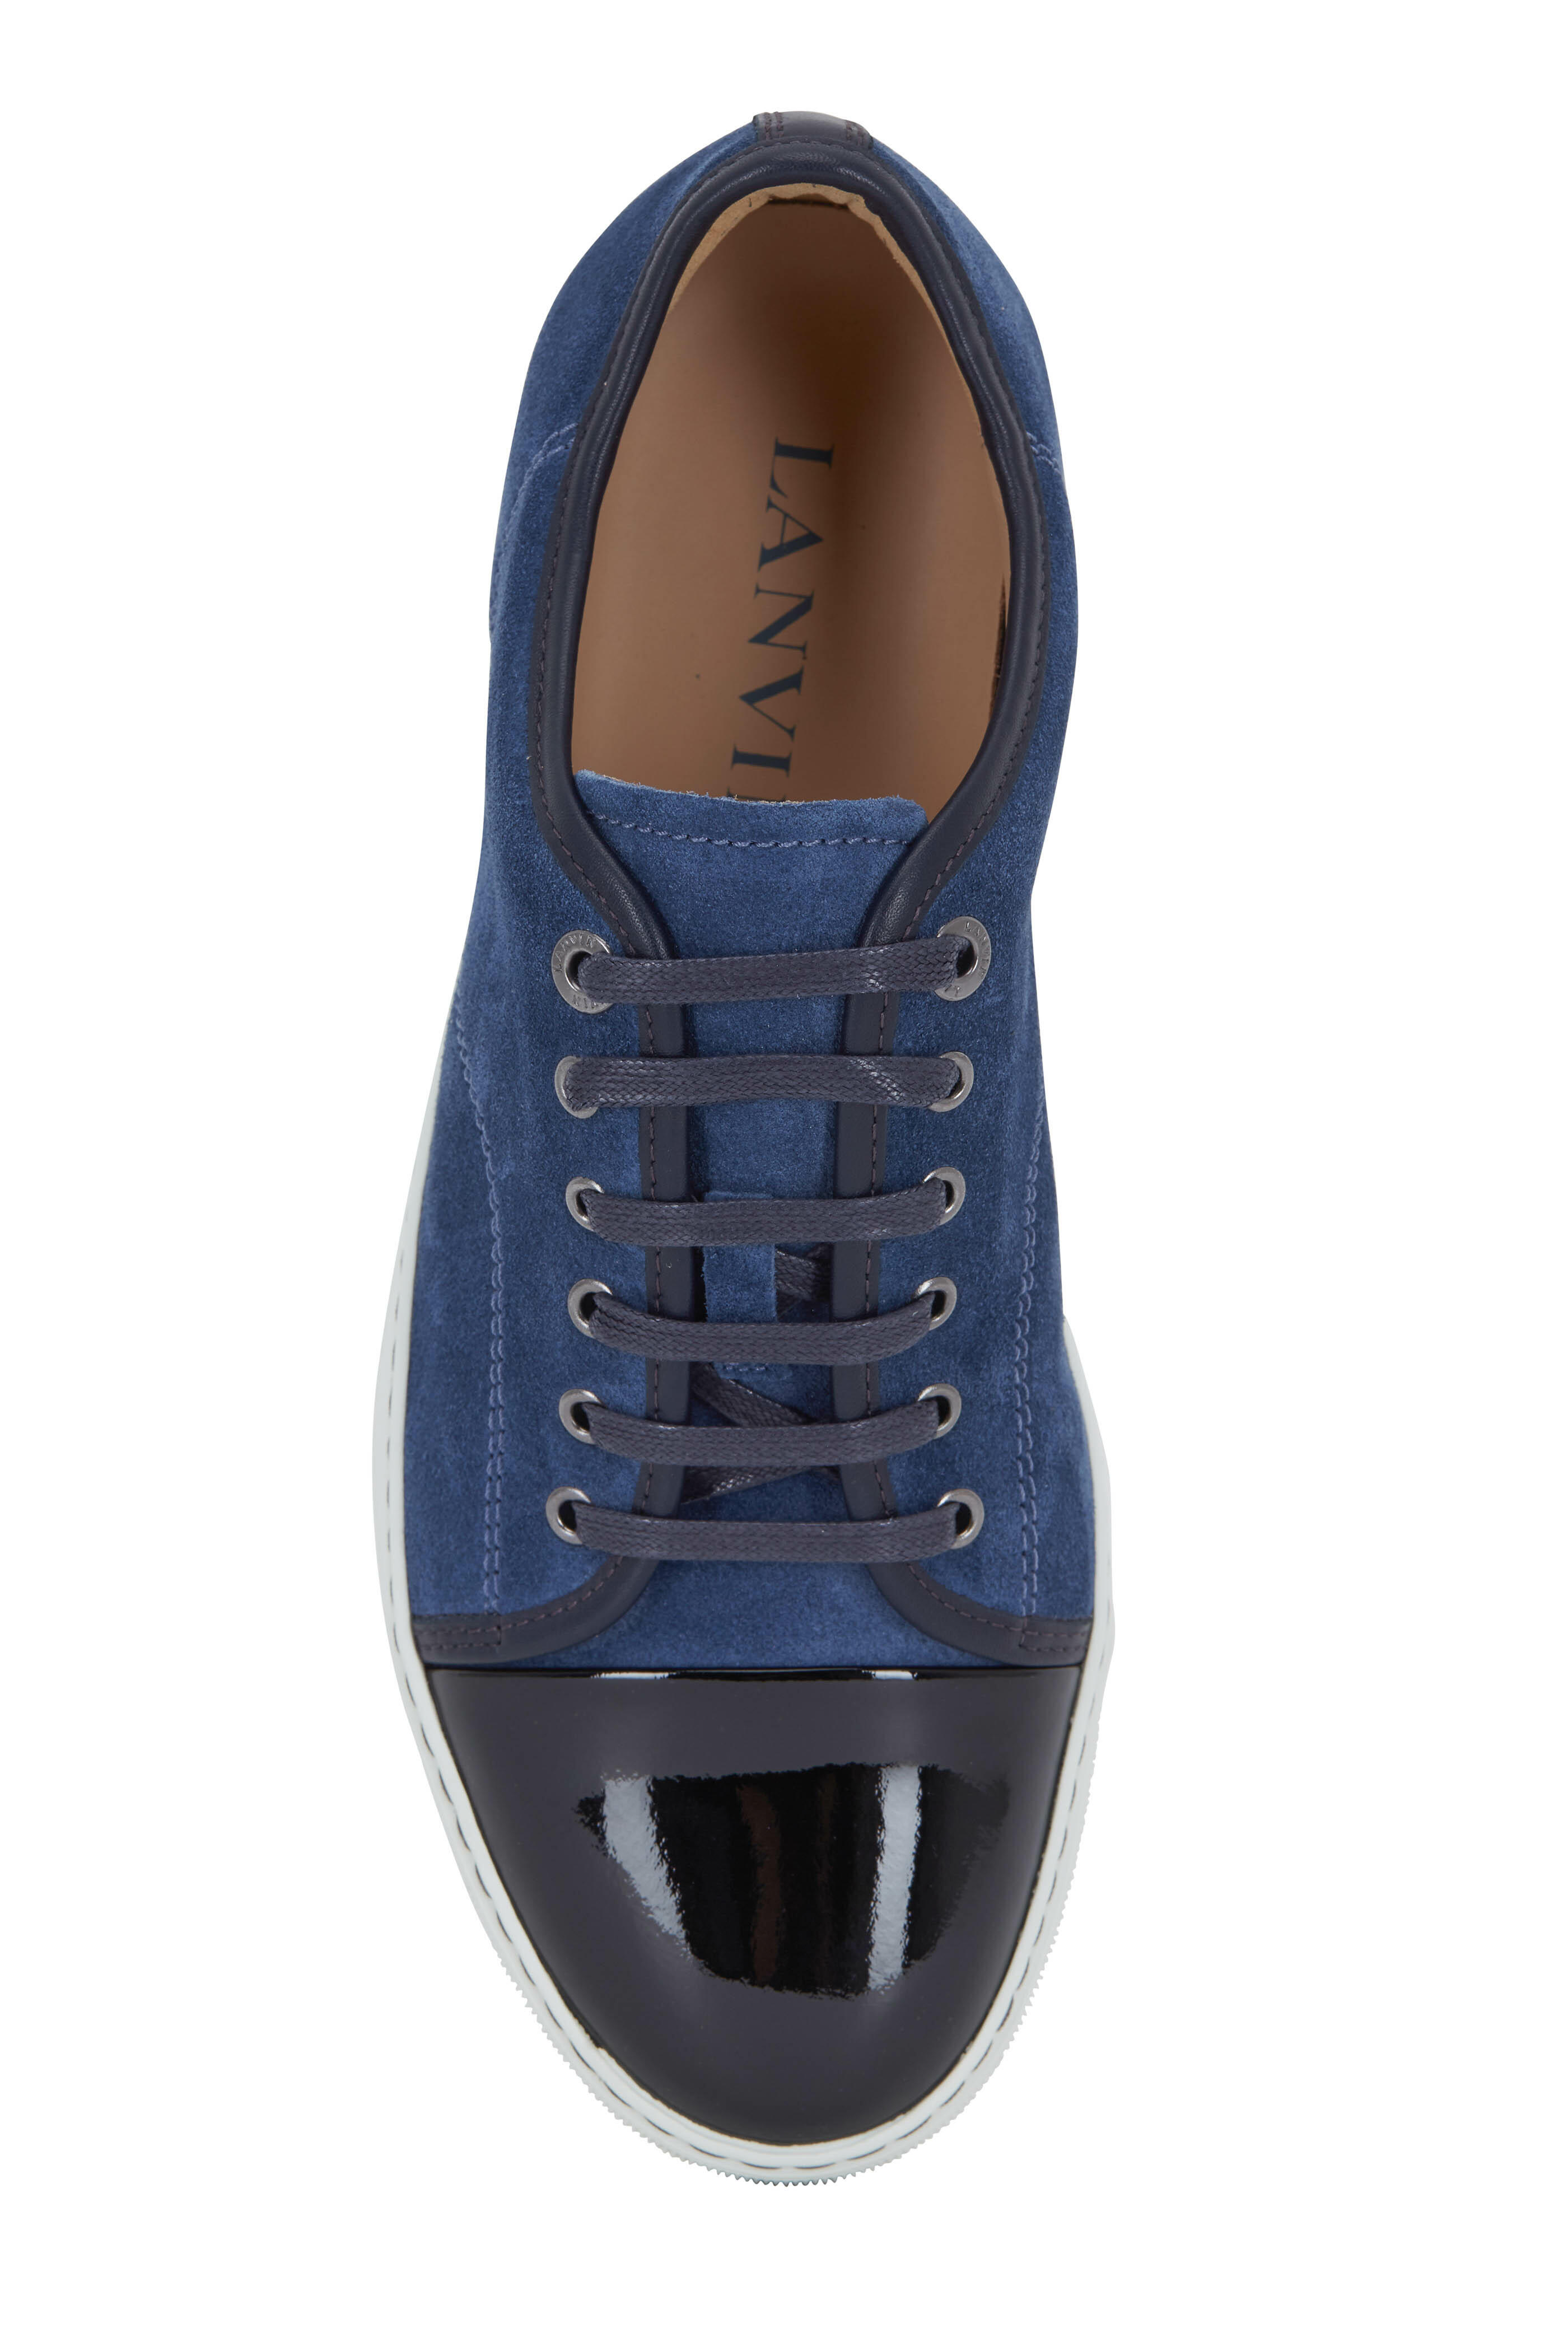 Lanvin Blue & Patent Leather Cap-Toe Sneaker